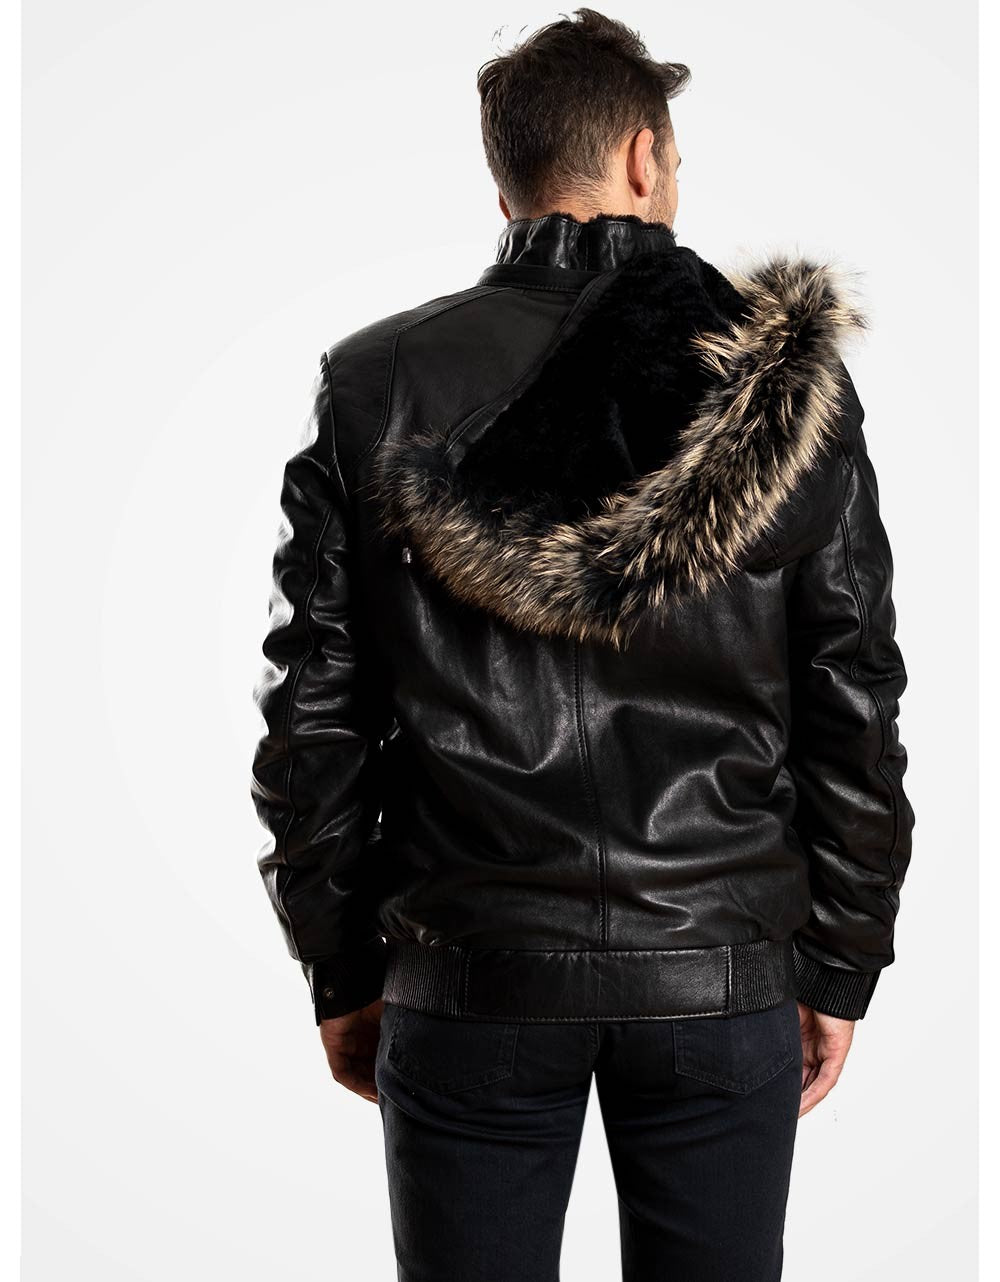 Black Hooded Leather Coat For Men